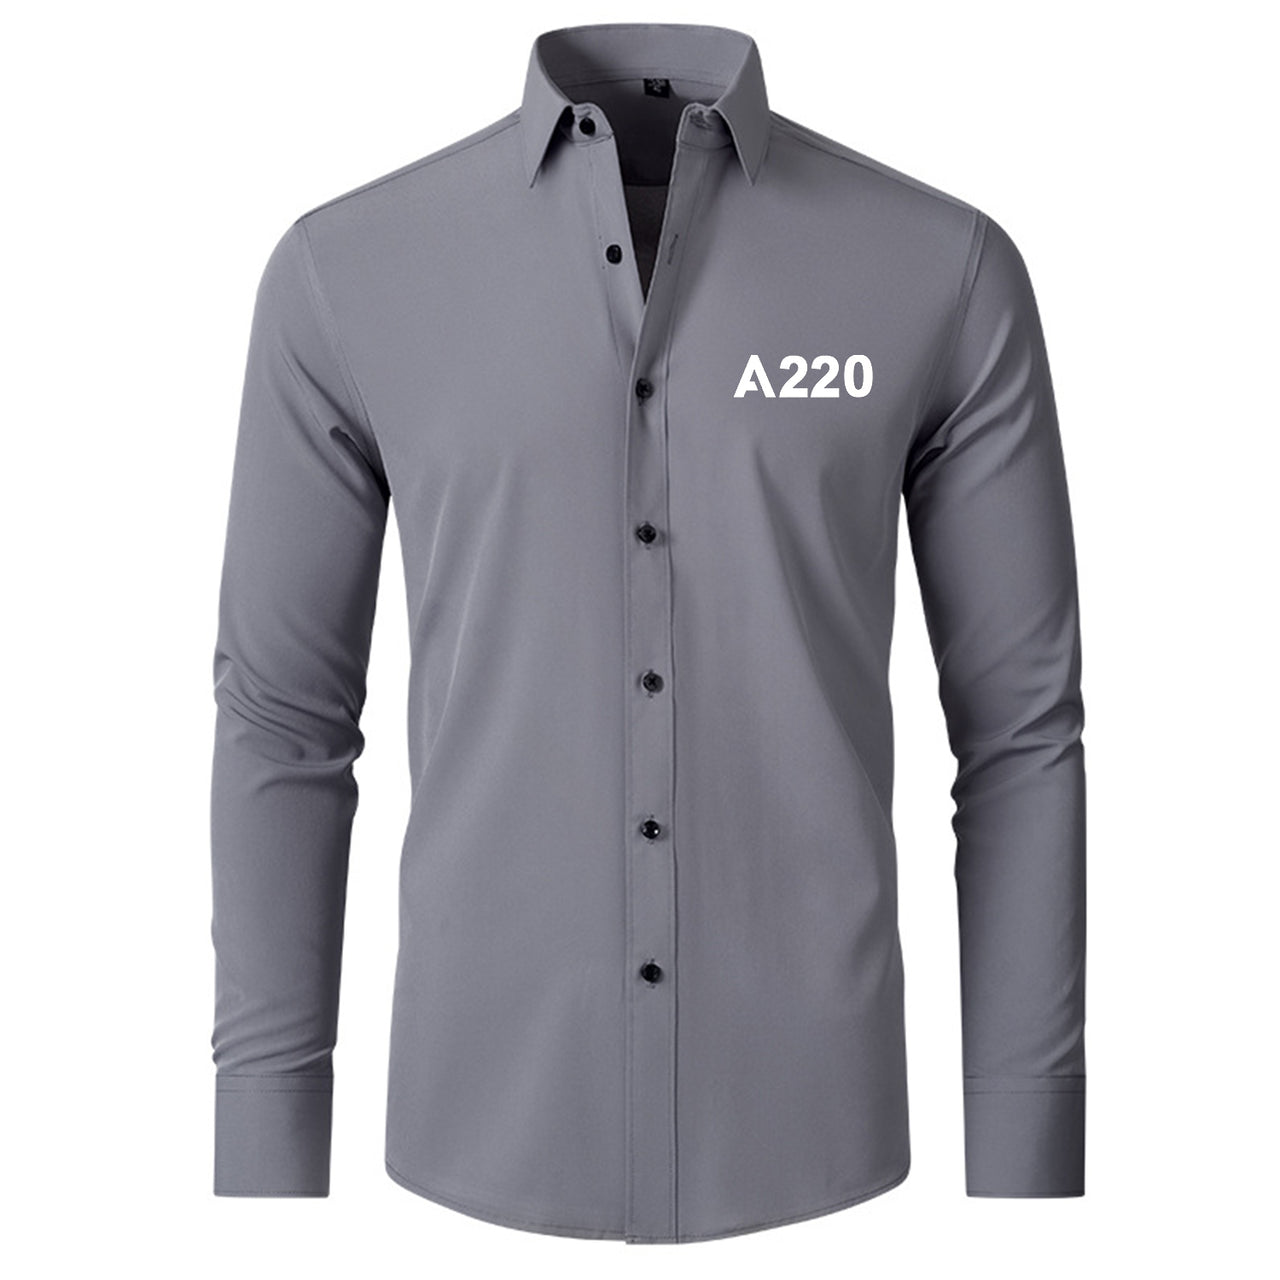 A220 Flat Text Designed Long Sleeve Shirts